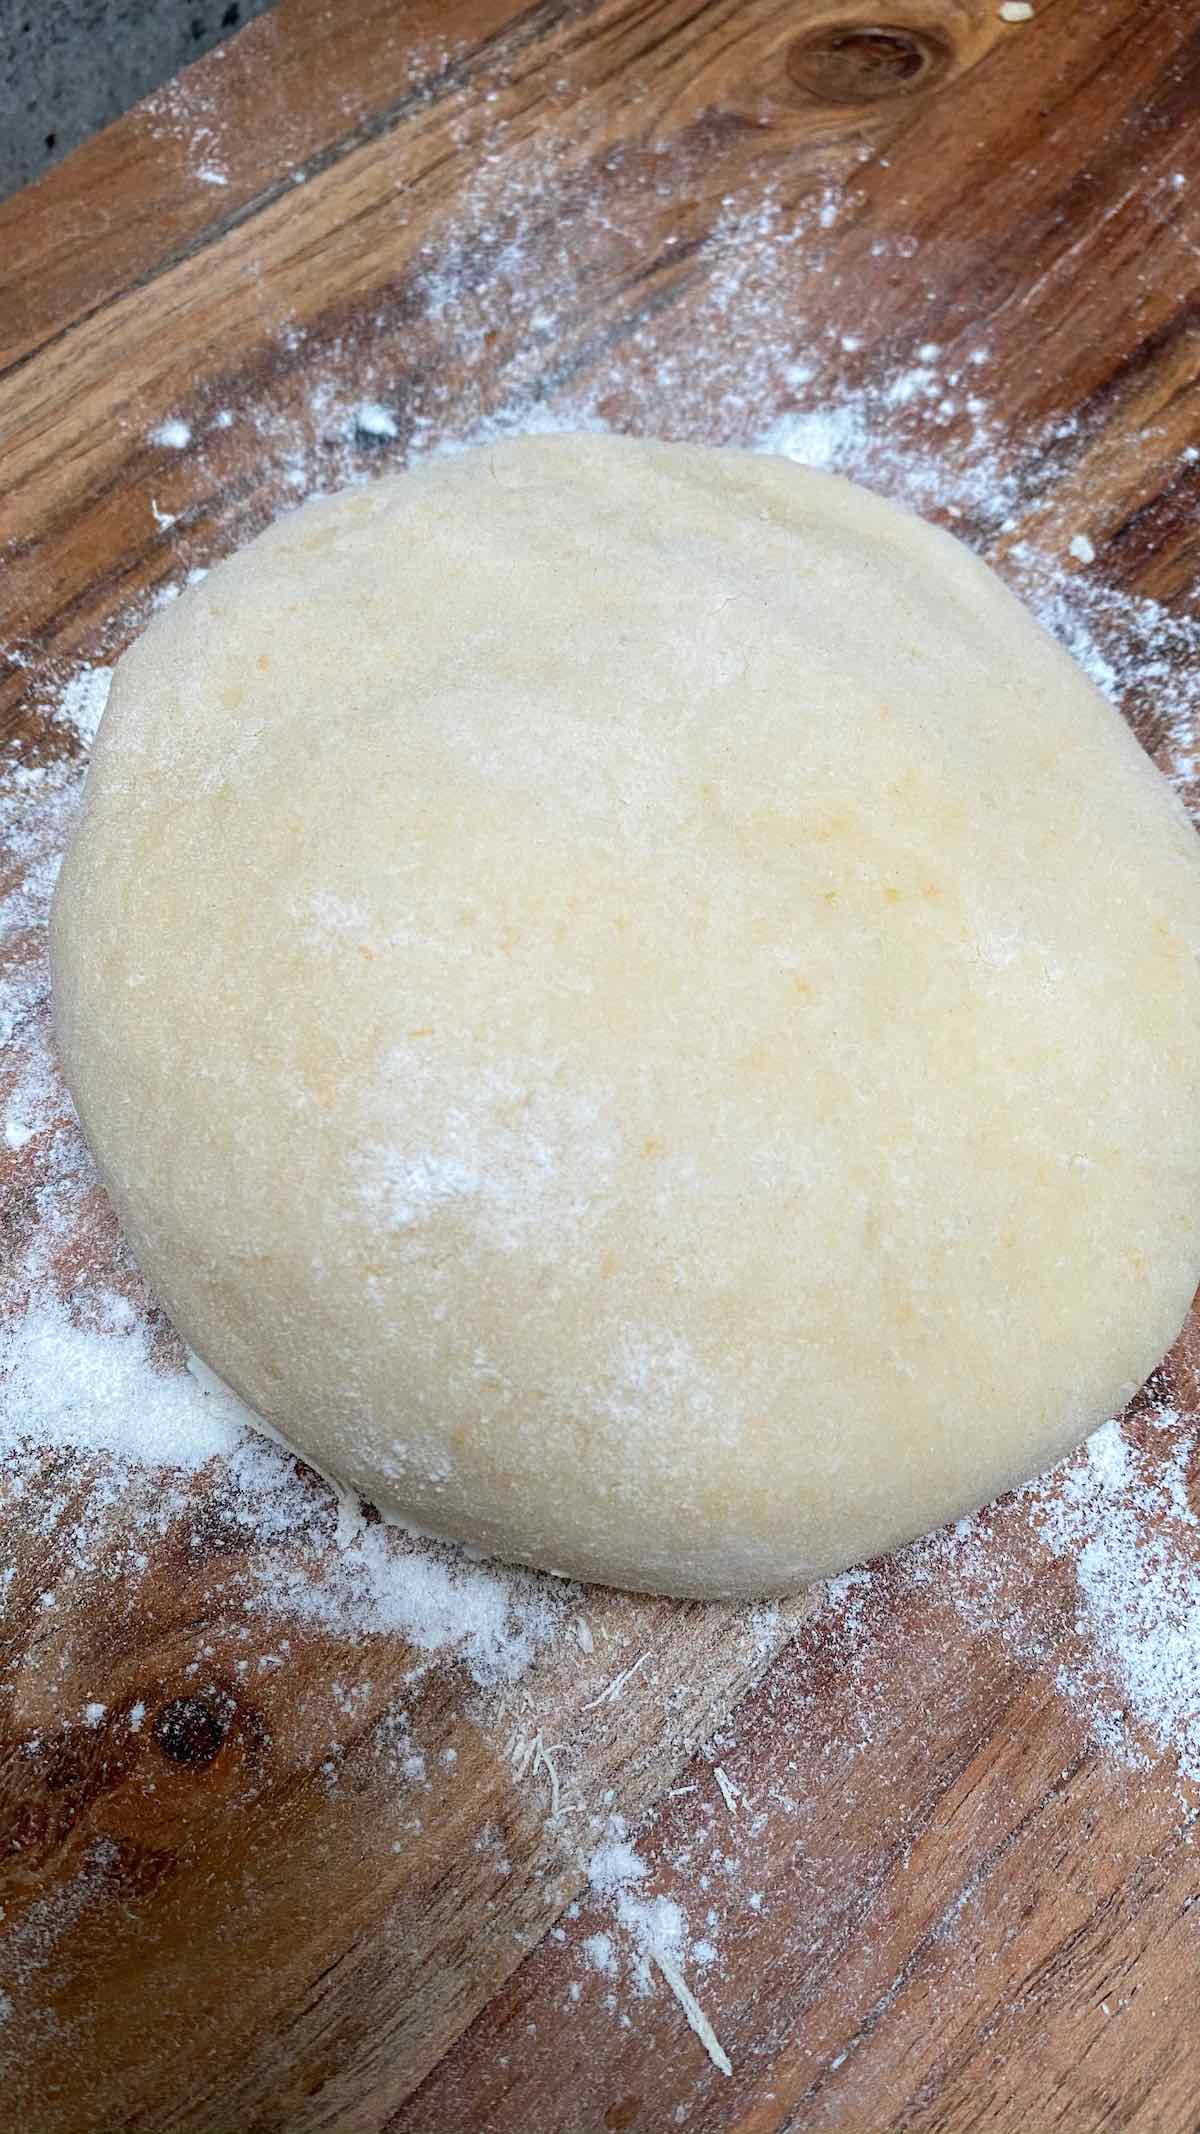 Gnocchi dough shaped in a bowl